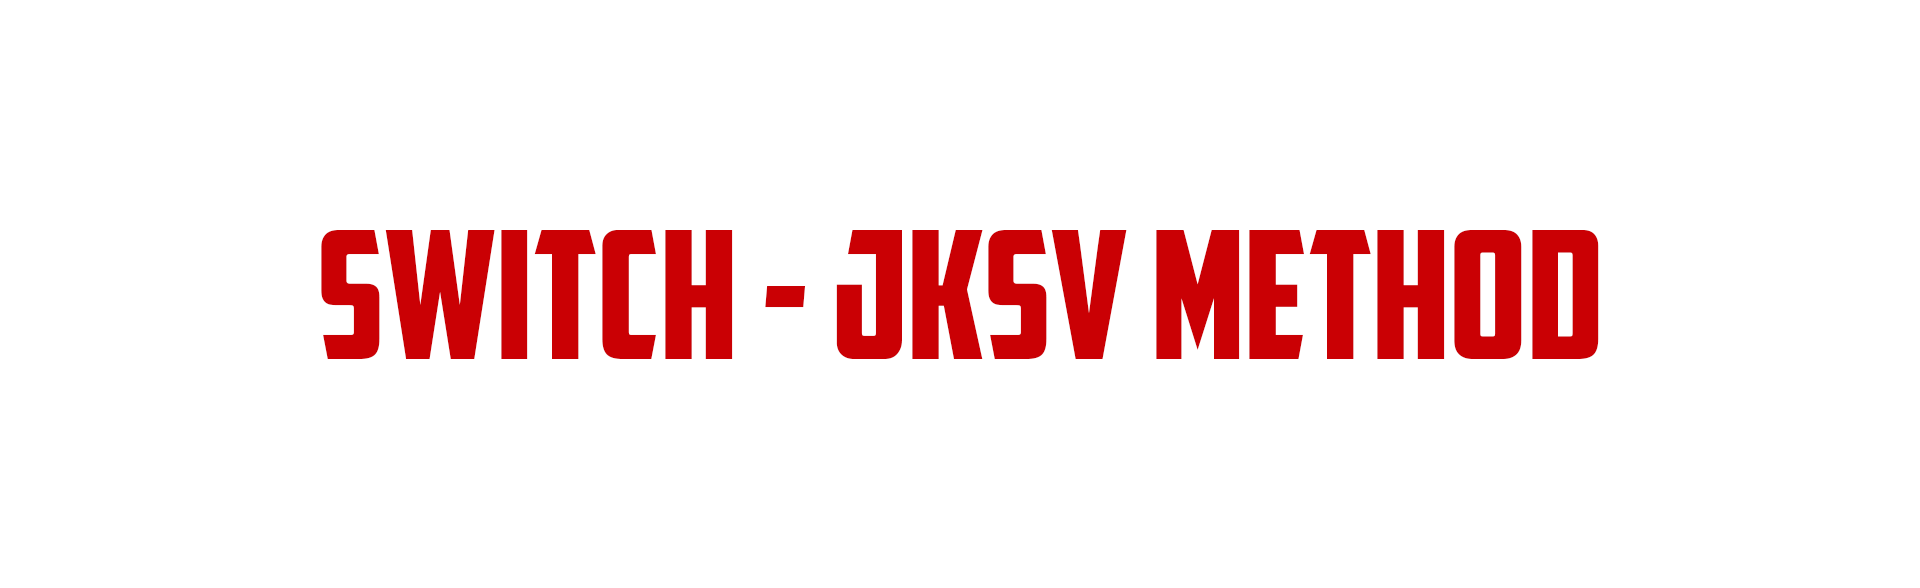 More information about "Using JKSV"